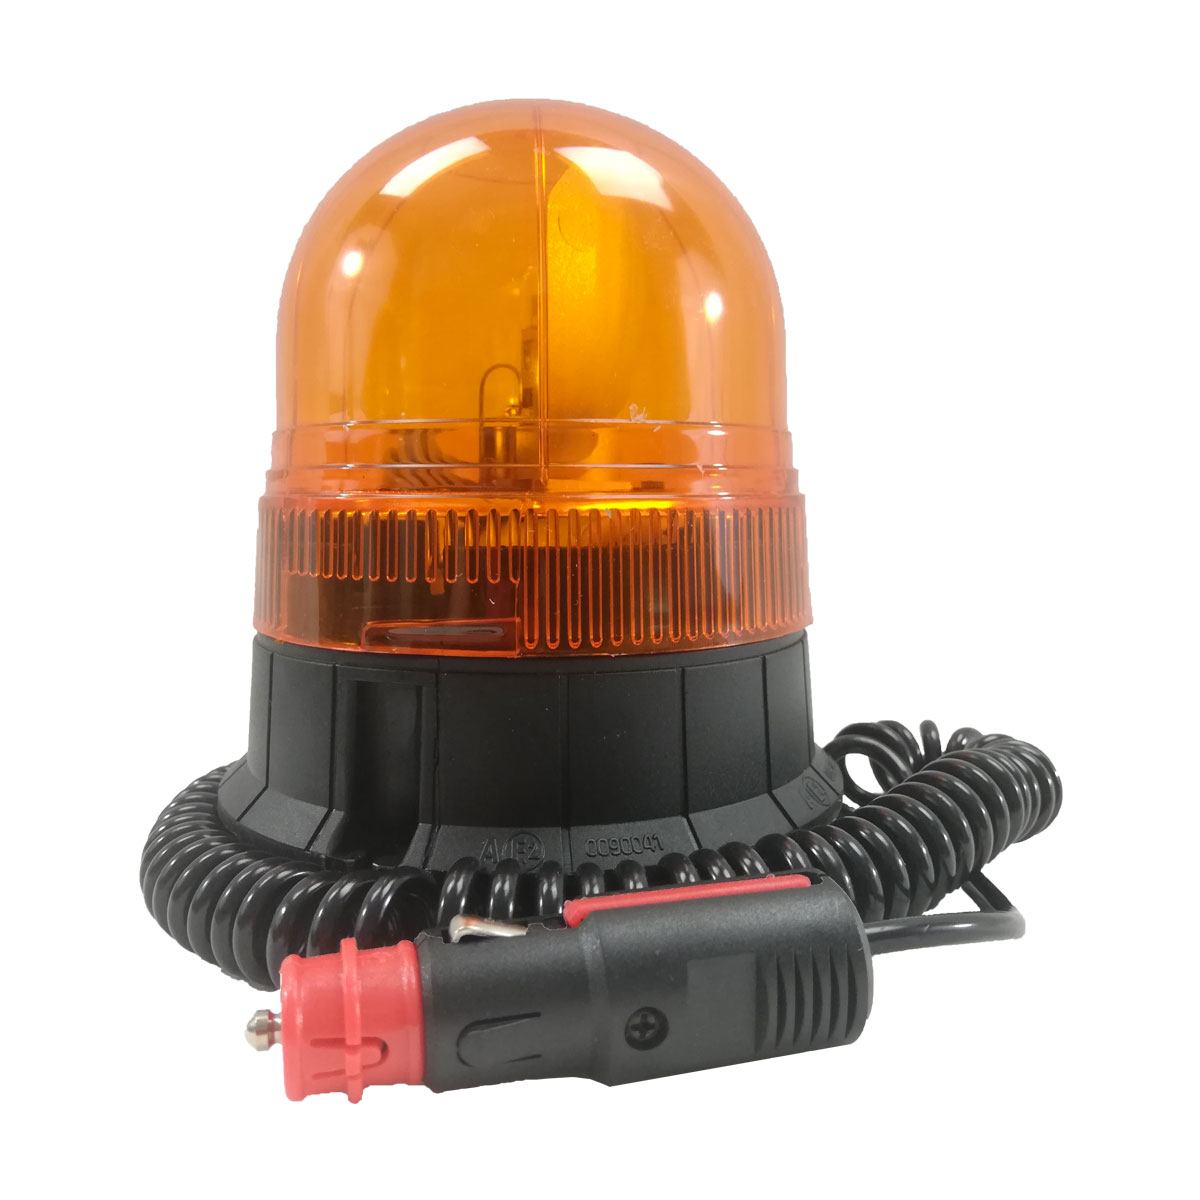 Gyrophare compact orange • câble 3m spiralé avec prise allume-cigare • Hauteur verrine 140 mm